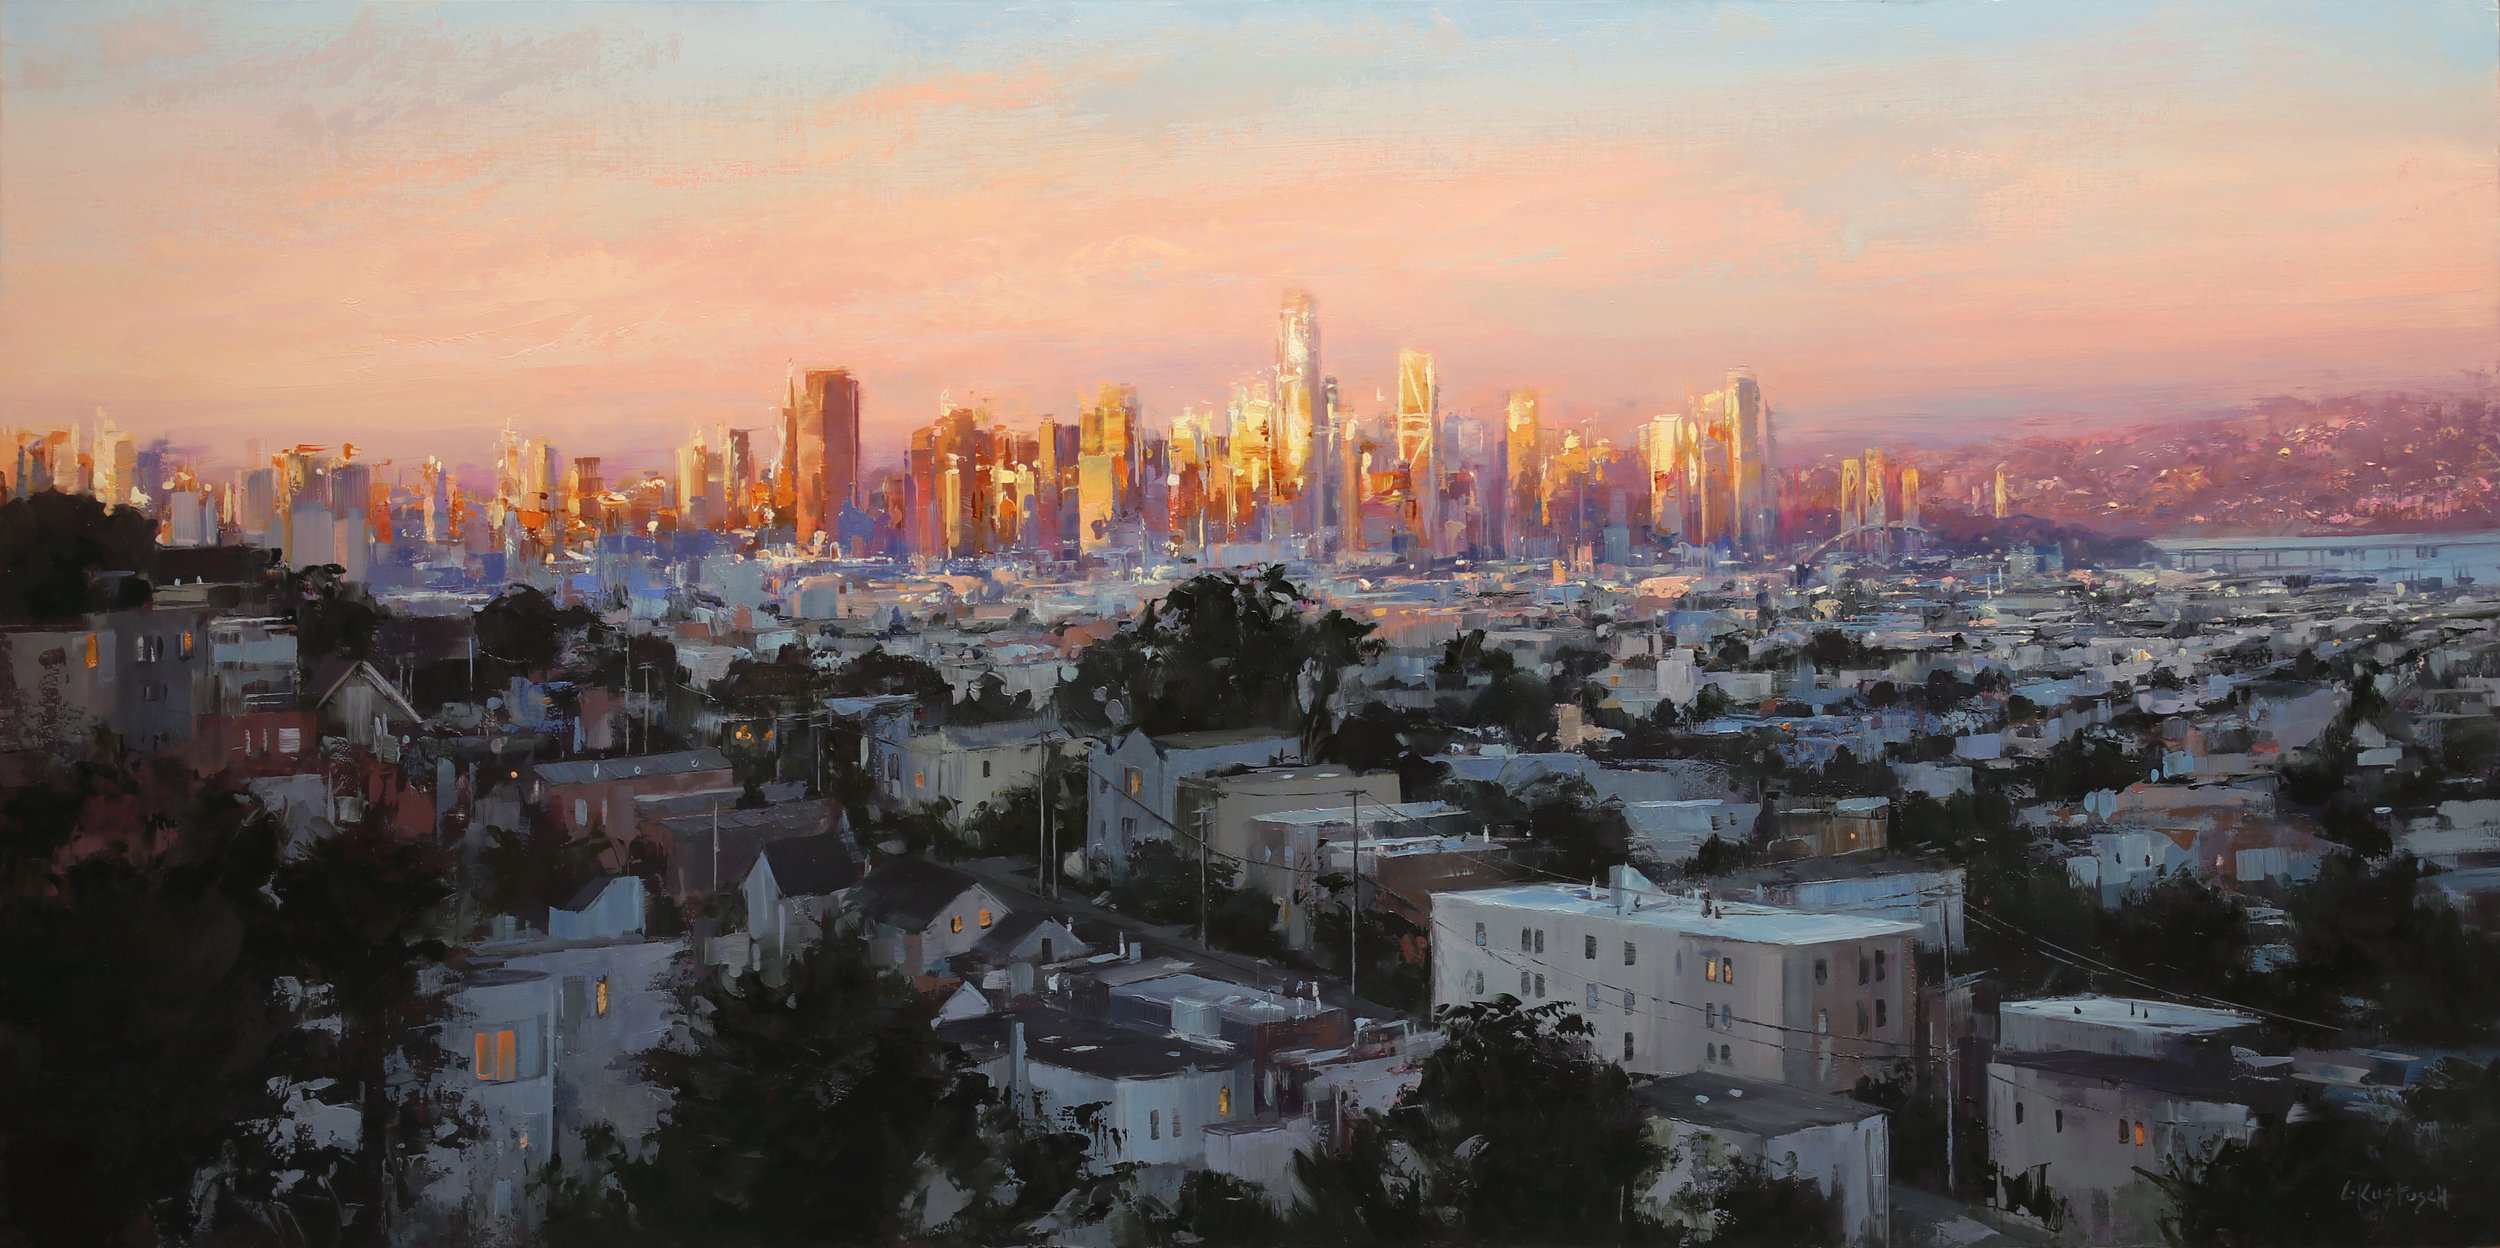 Last Light over the City by Lindsey Kustusch